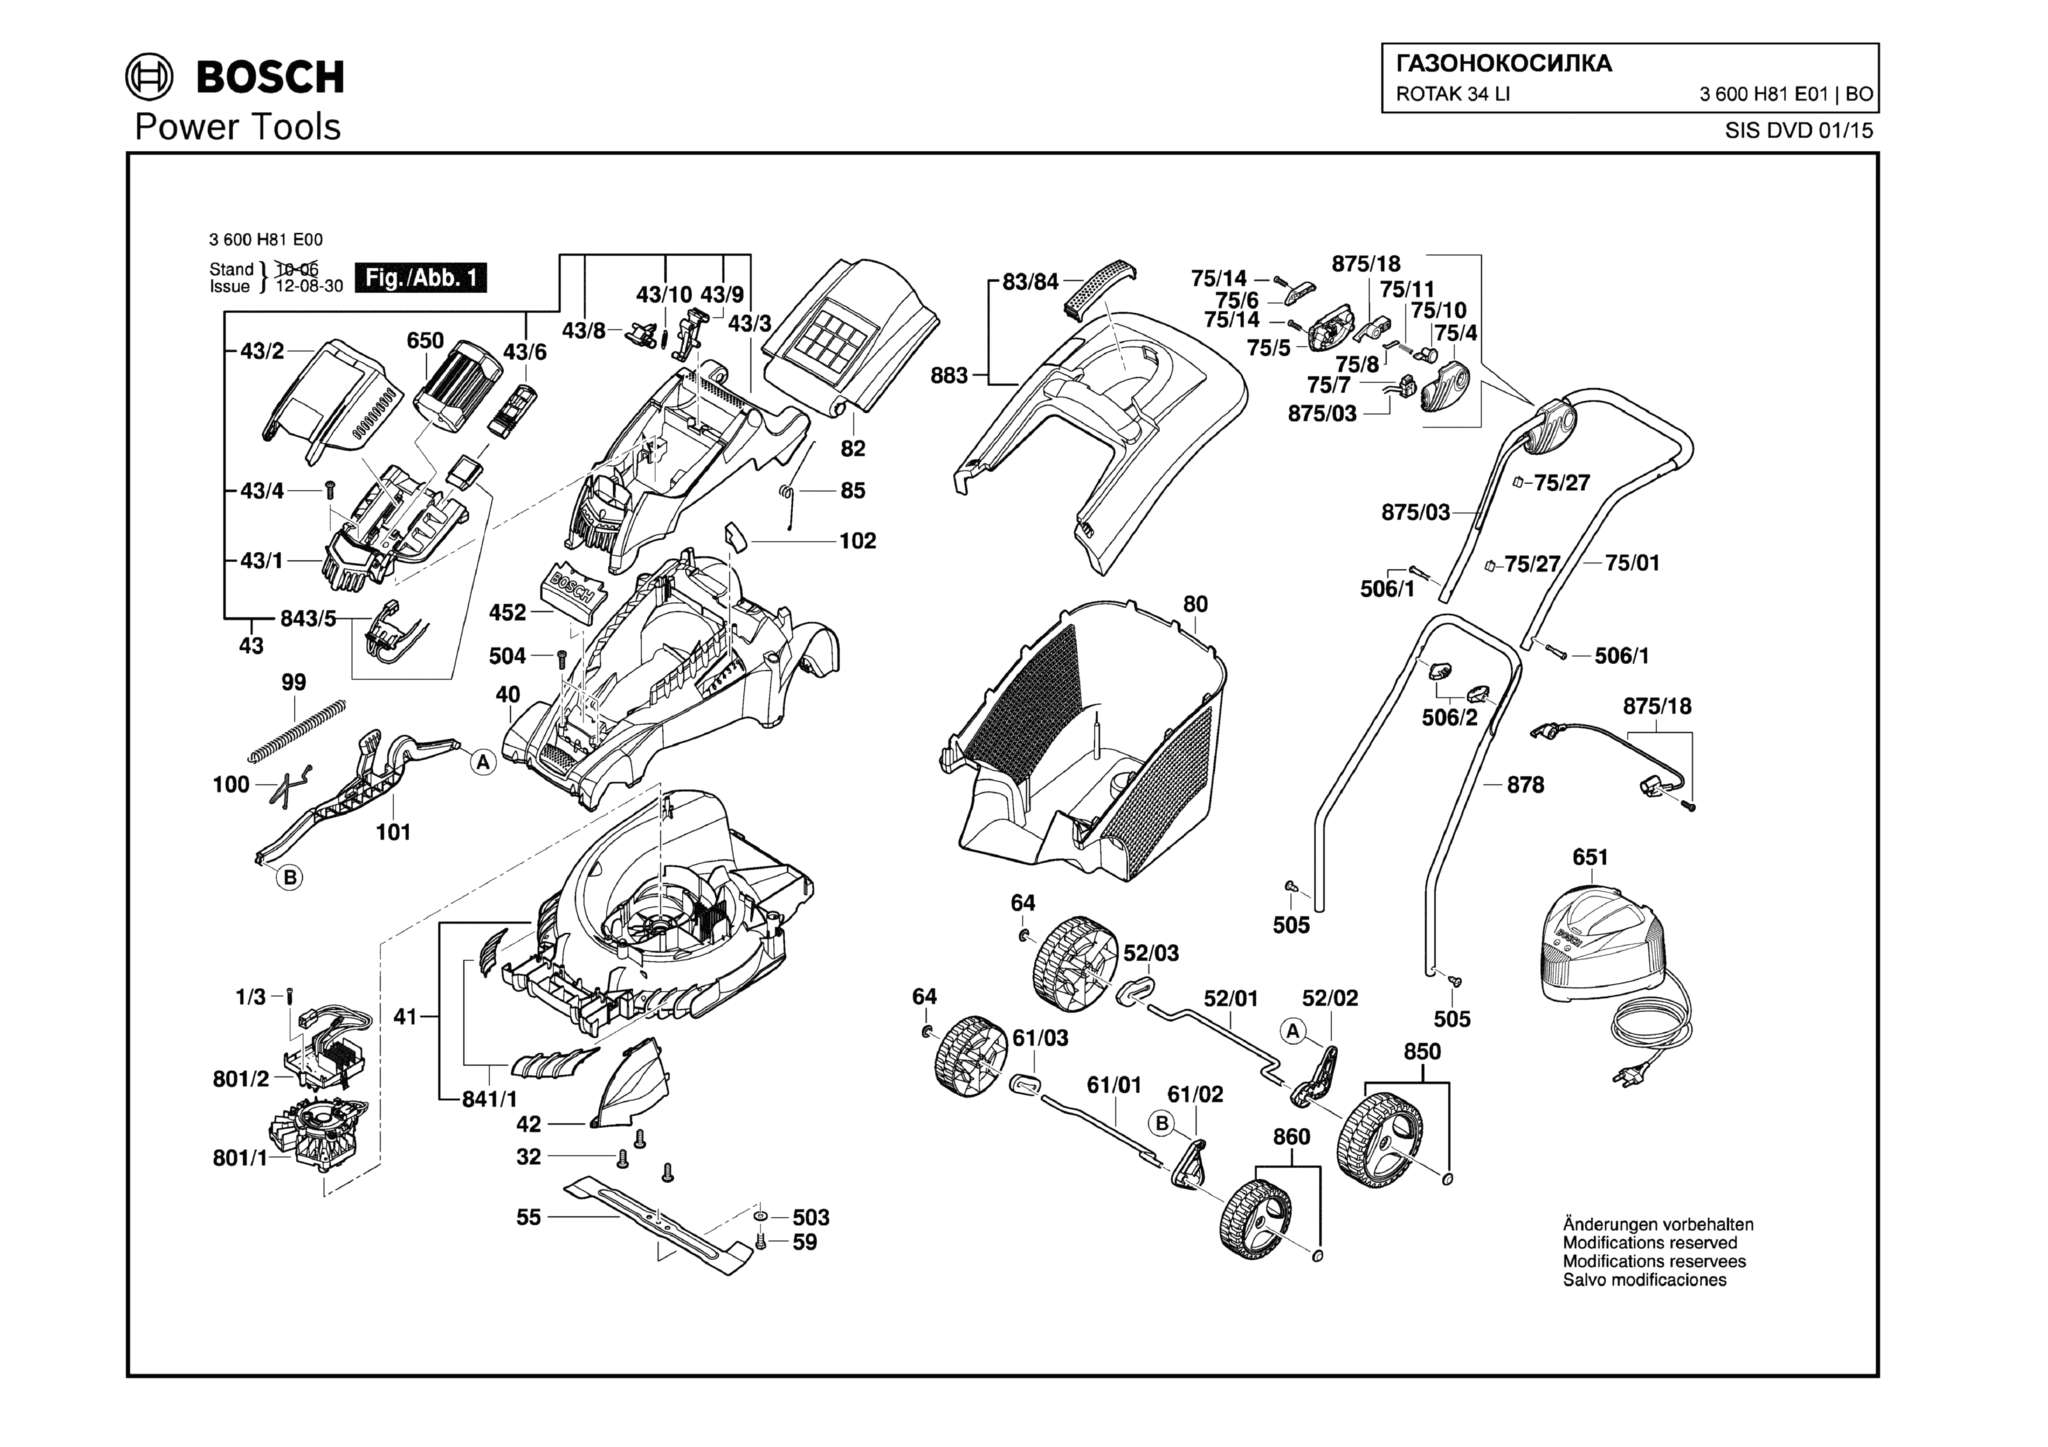 Запчасти, схема и деталировка Bosch ROTAK 34 LI (ТИП 3600H81E01)